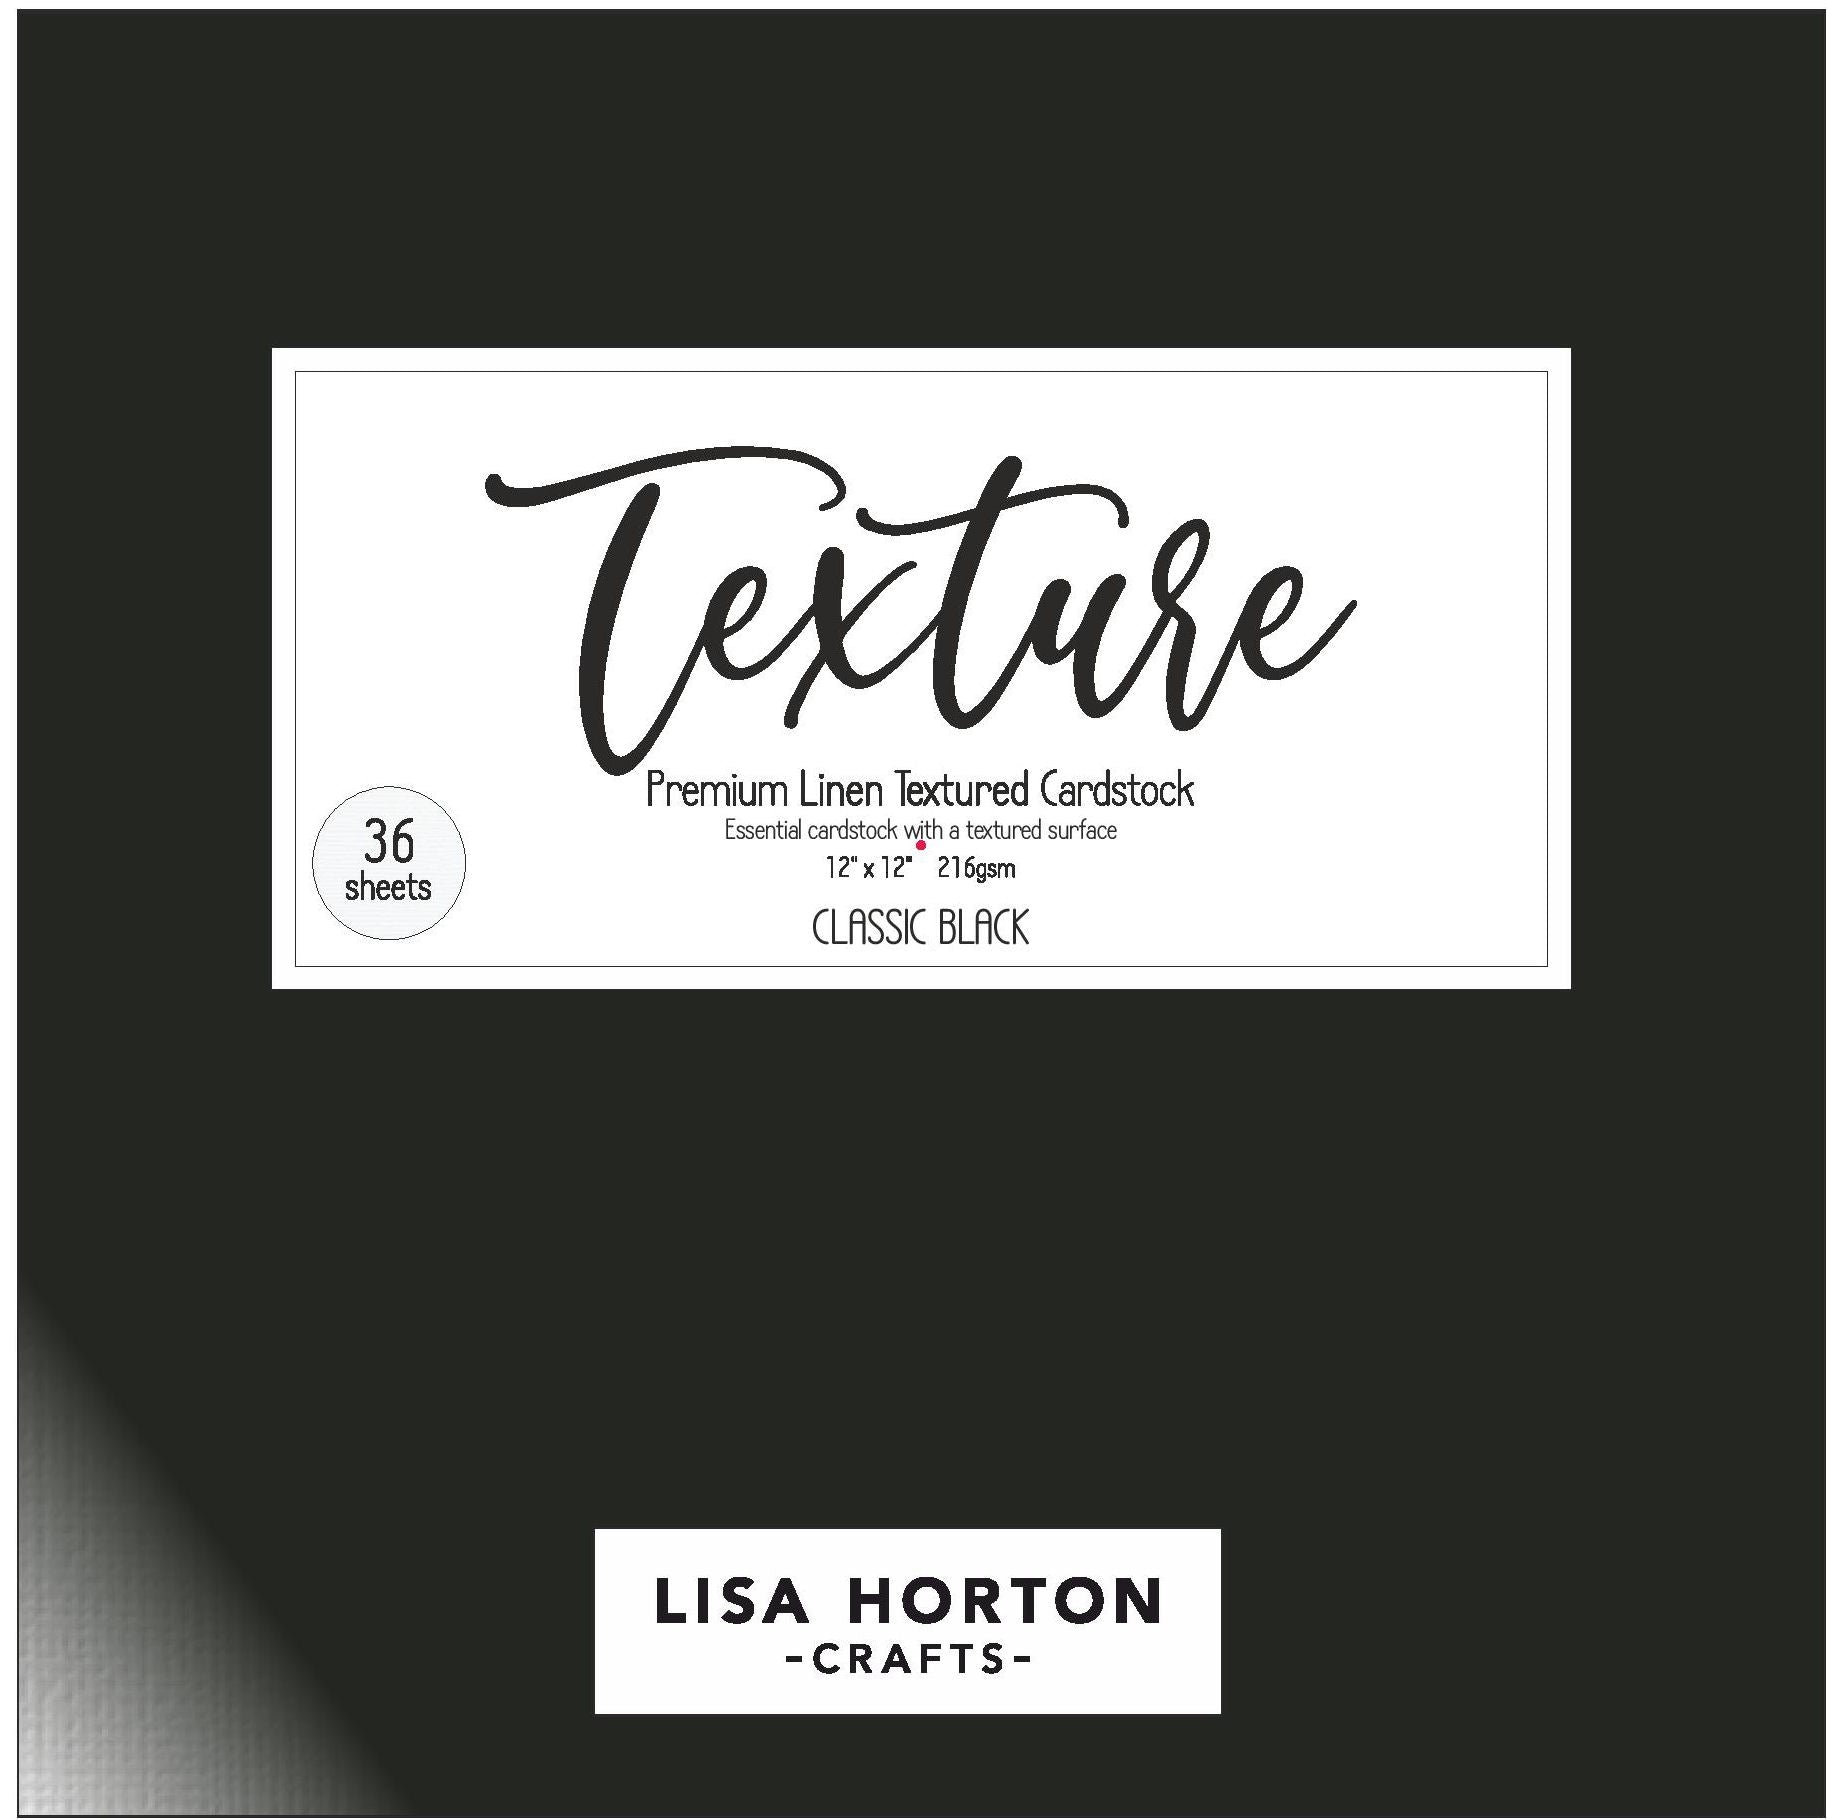 Textured Linen Cardstock - Classic Black 36 12x12 sheets